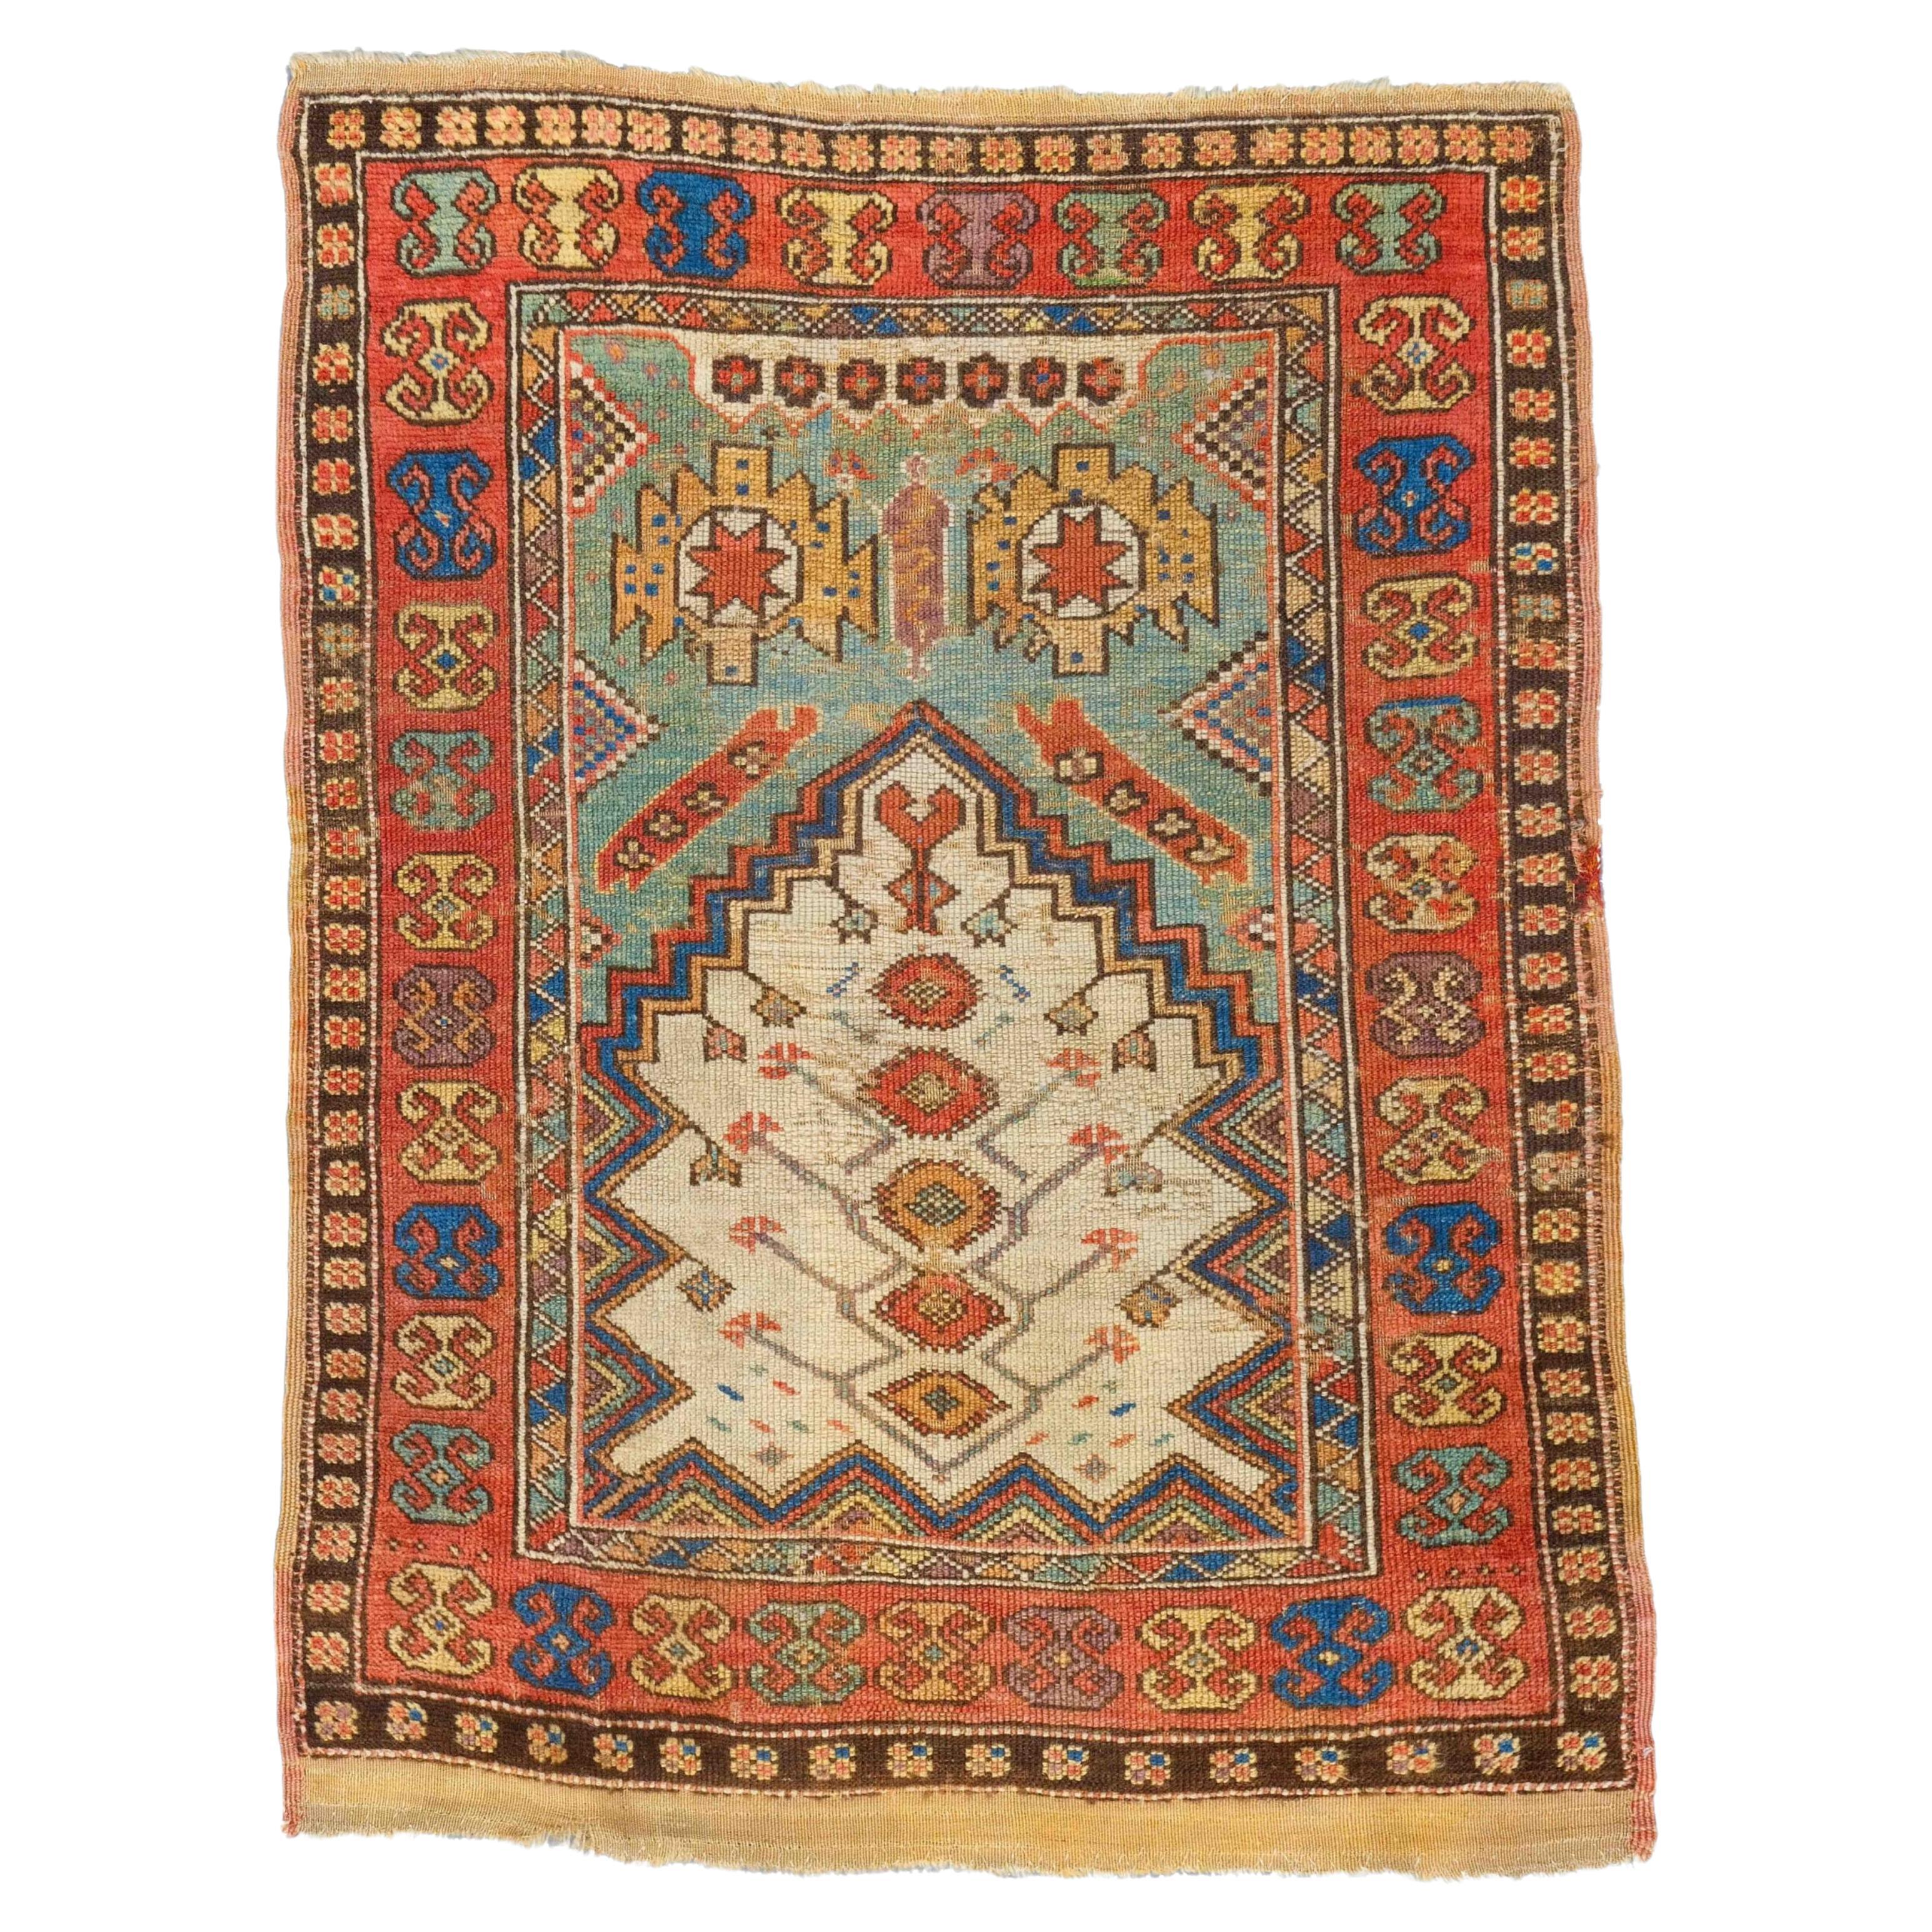 Antique Konya Rug - Early 19th Century Central Anatolian Konya Prayer Rug For Sale